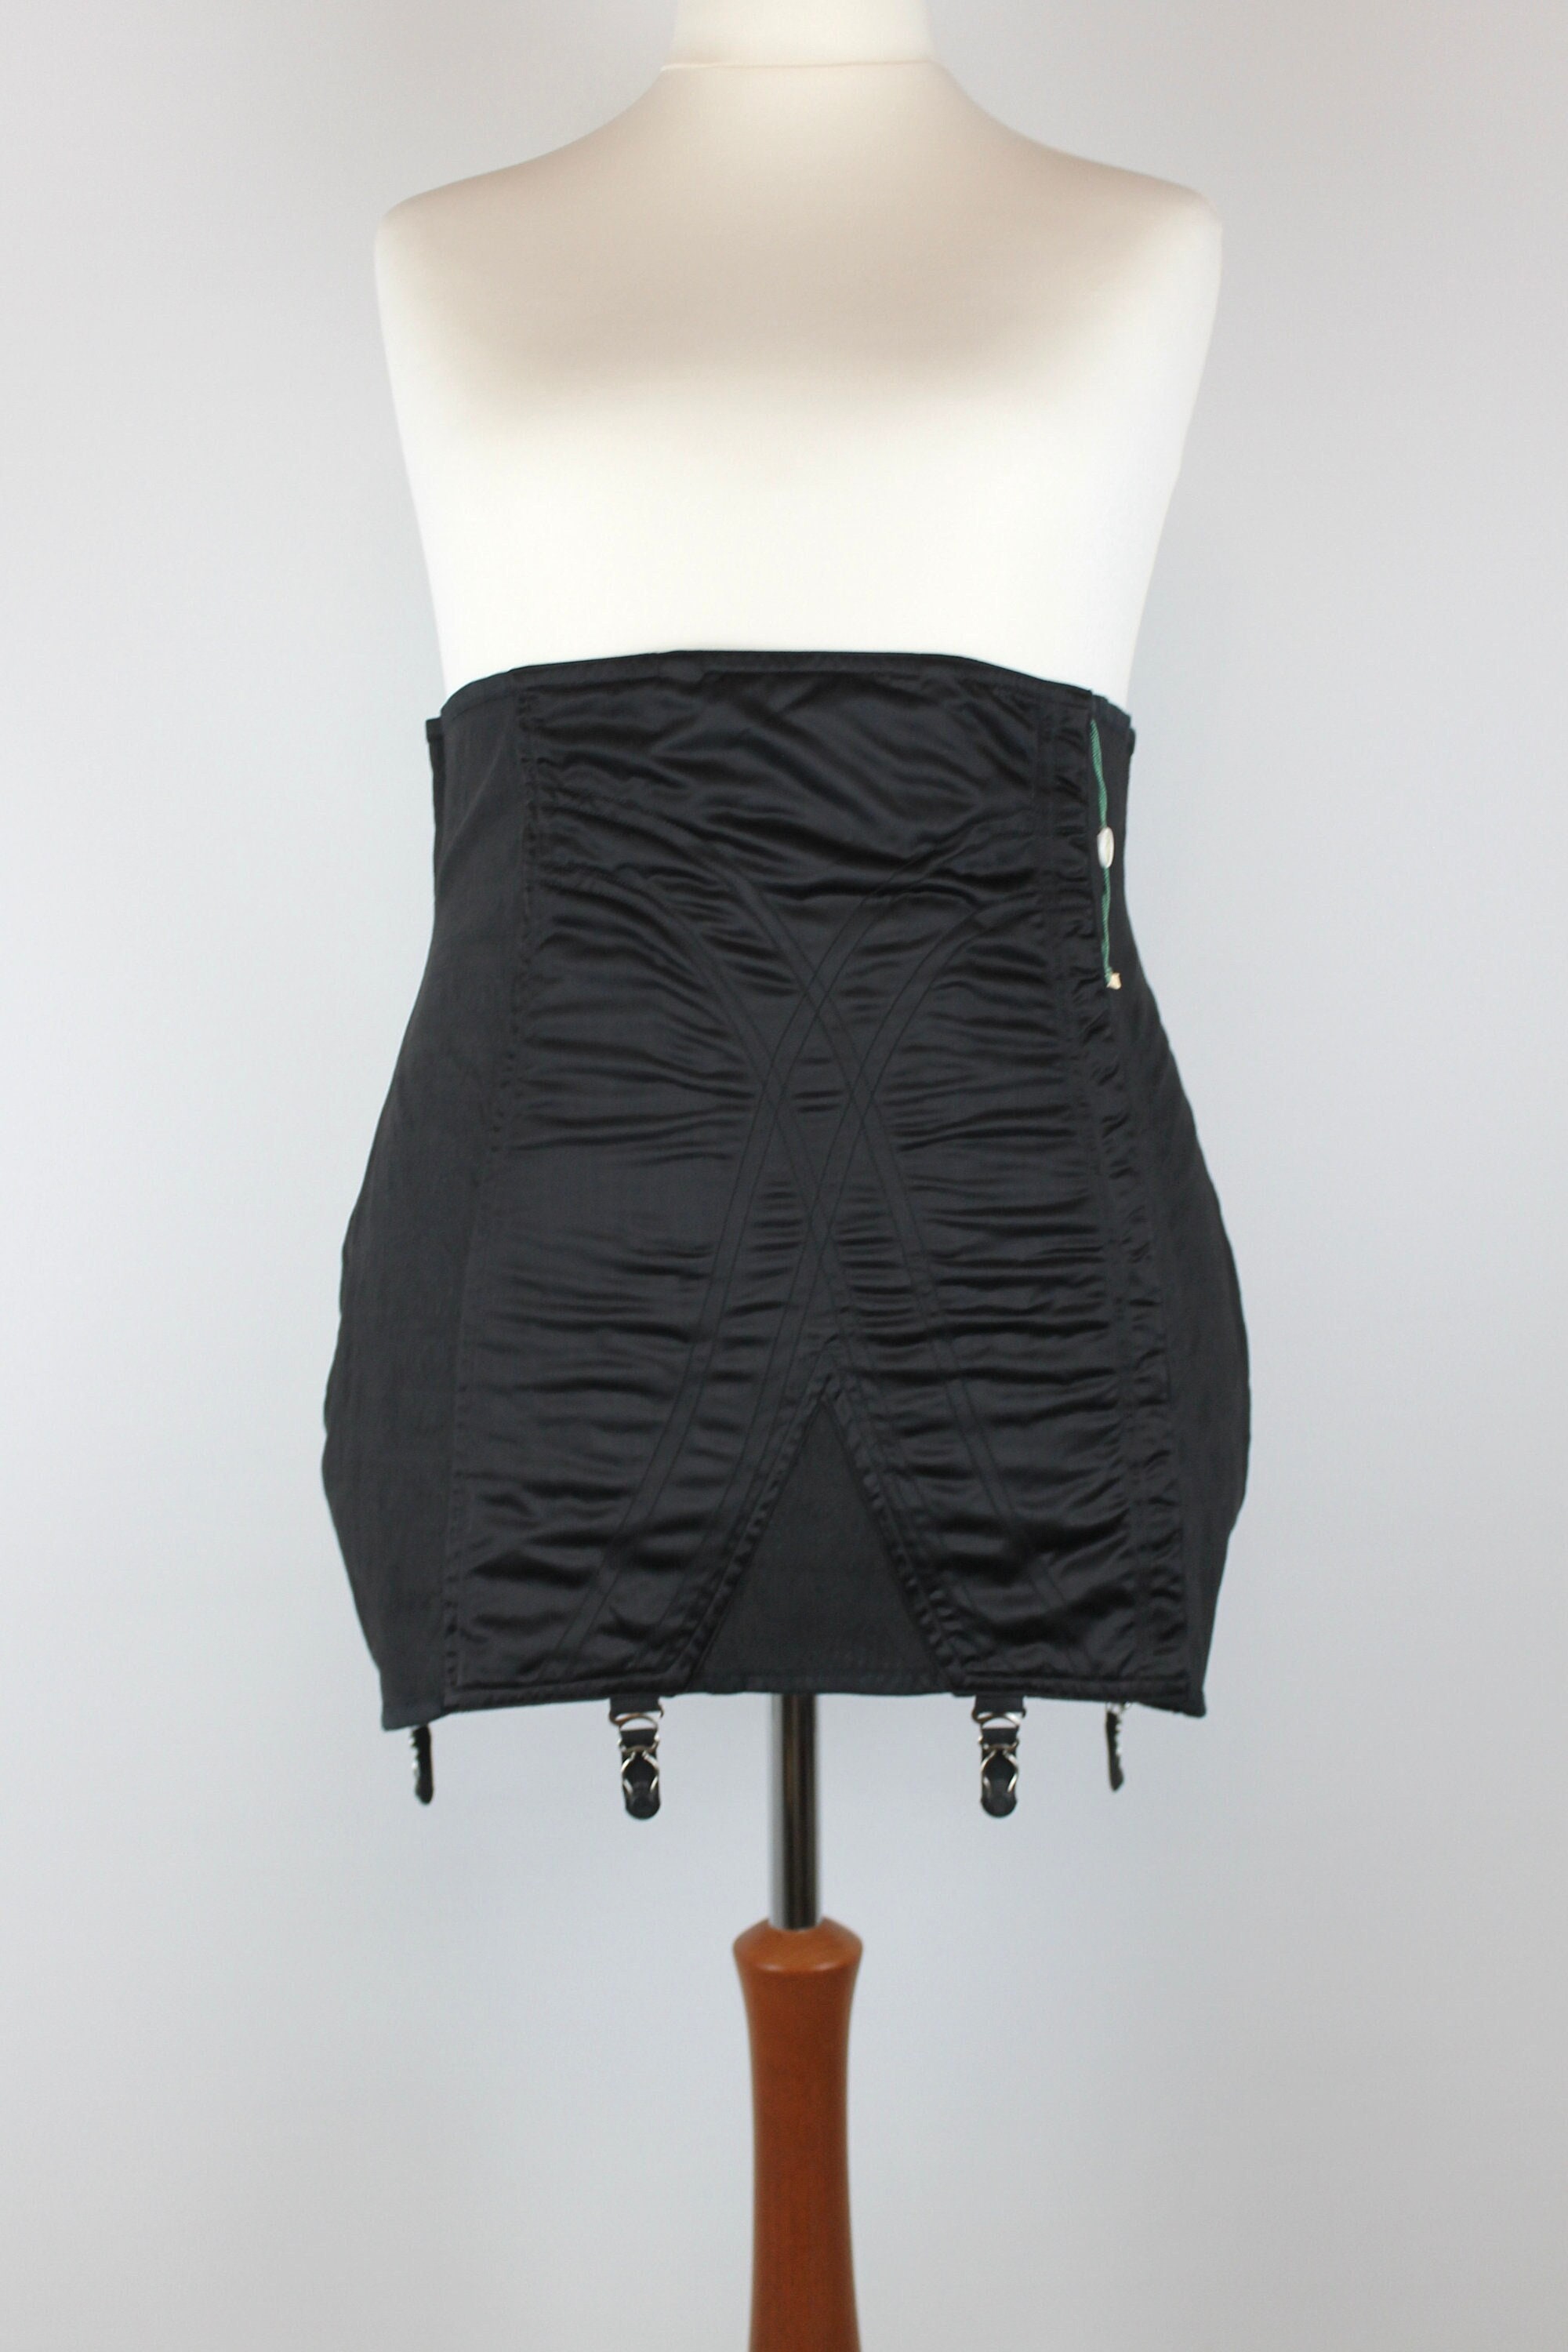 PLUS SIZE 1960s Black Armonia Shapewear Girdle, Vintage Garter Belt,  Suspender Belt, Burlesque Costume, Boudoir Lingerie